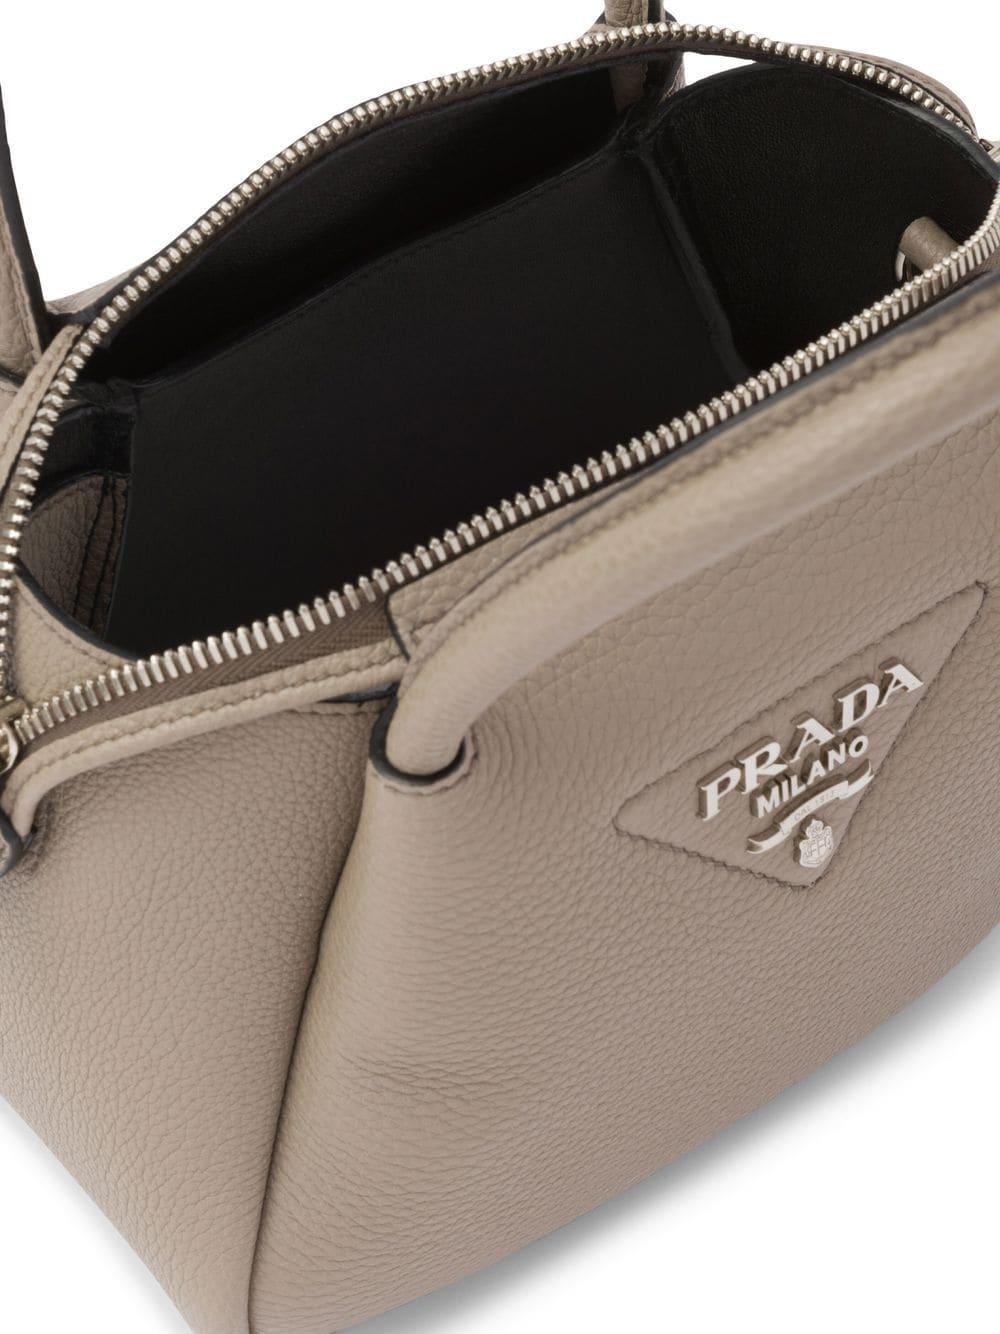 PRADA Prada Logo Plaque Crystal Embellished Mini Bag - Stylemyle